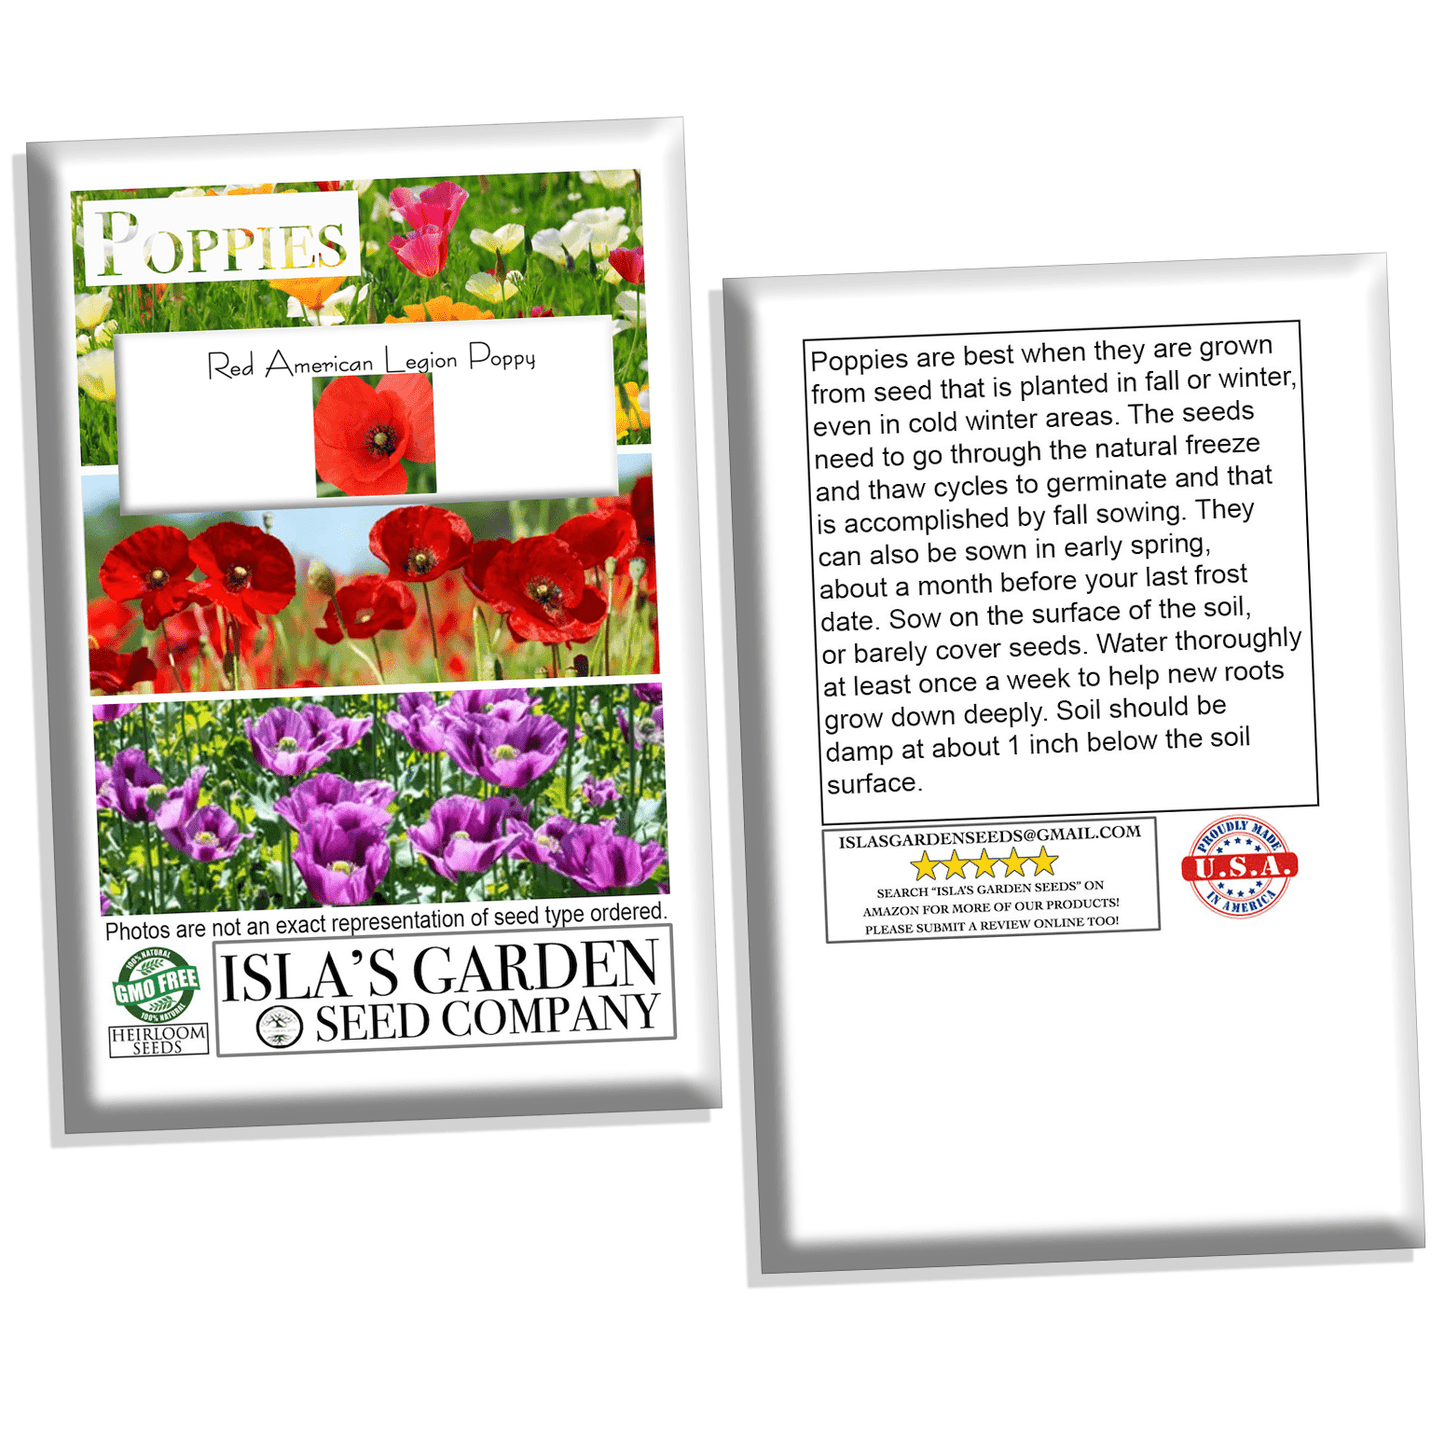 Red American Legion Poppy Seeds, 3000 Flower Seeds Per Packet